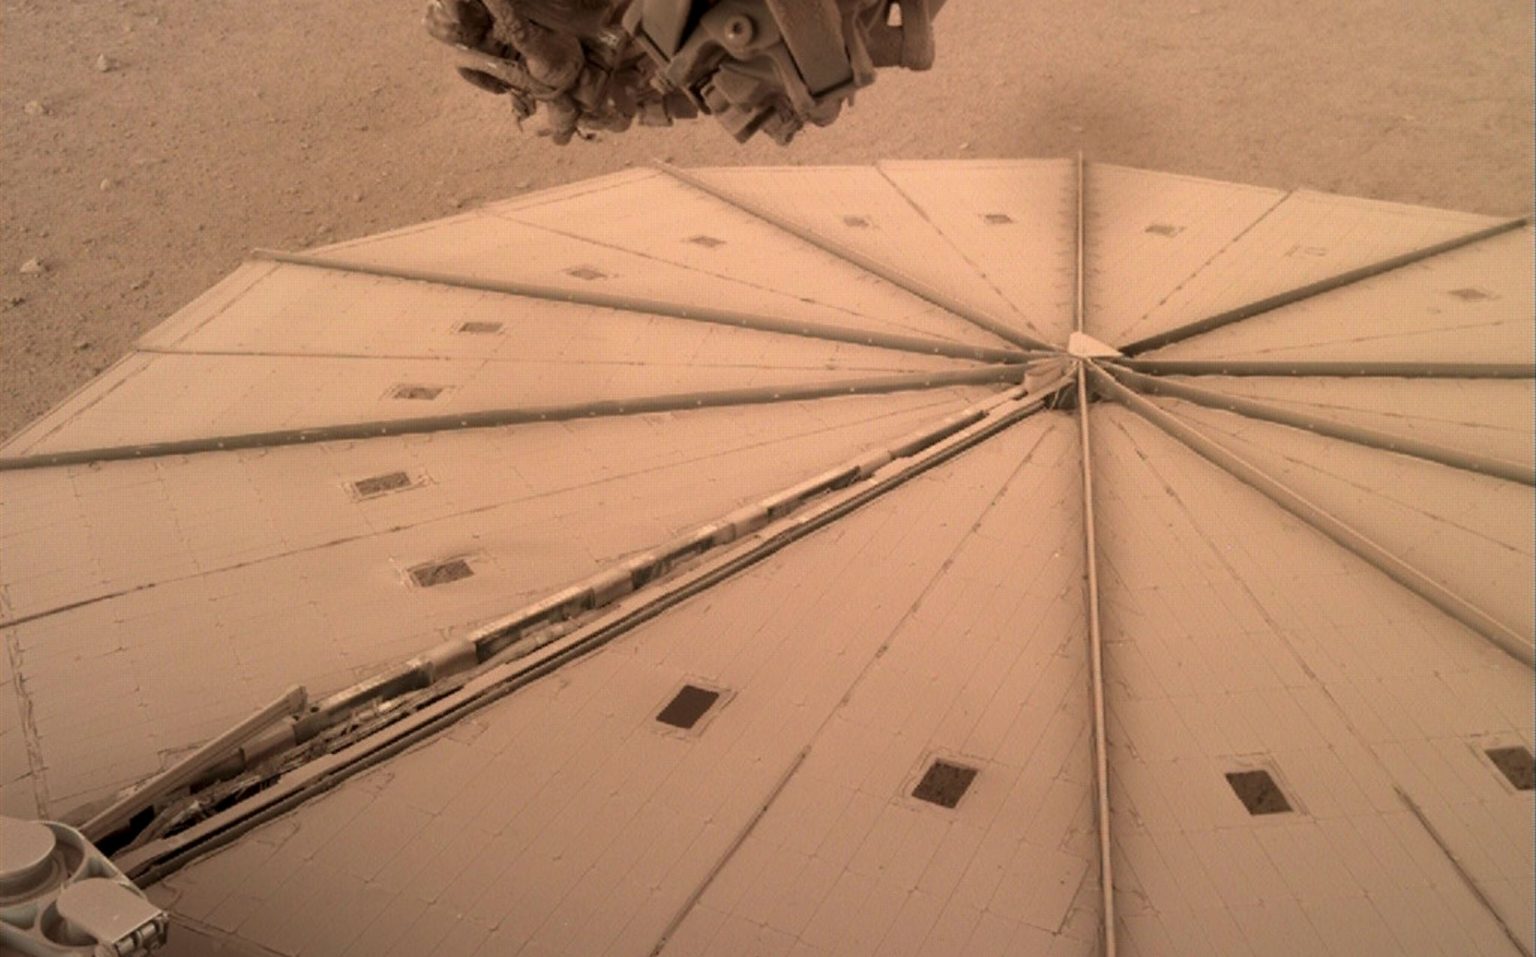 Solarni paneli InSight landera prekriveni prašinom. Izvor: Nasa.gov.